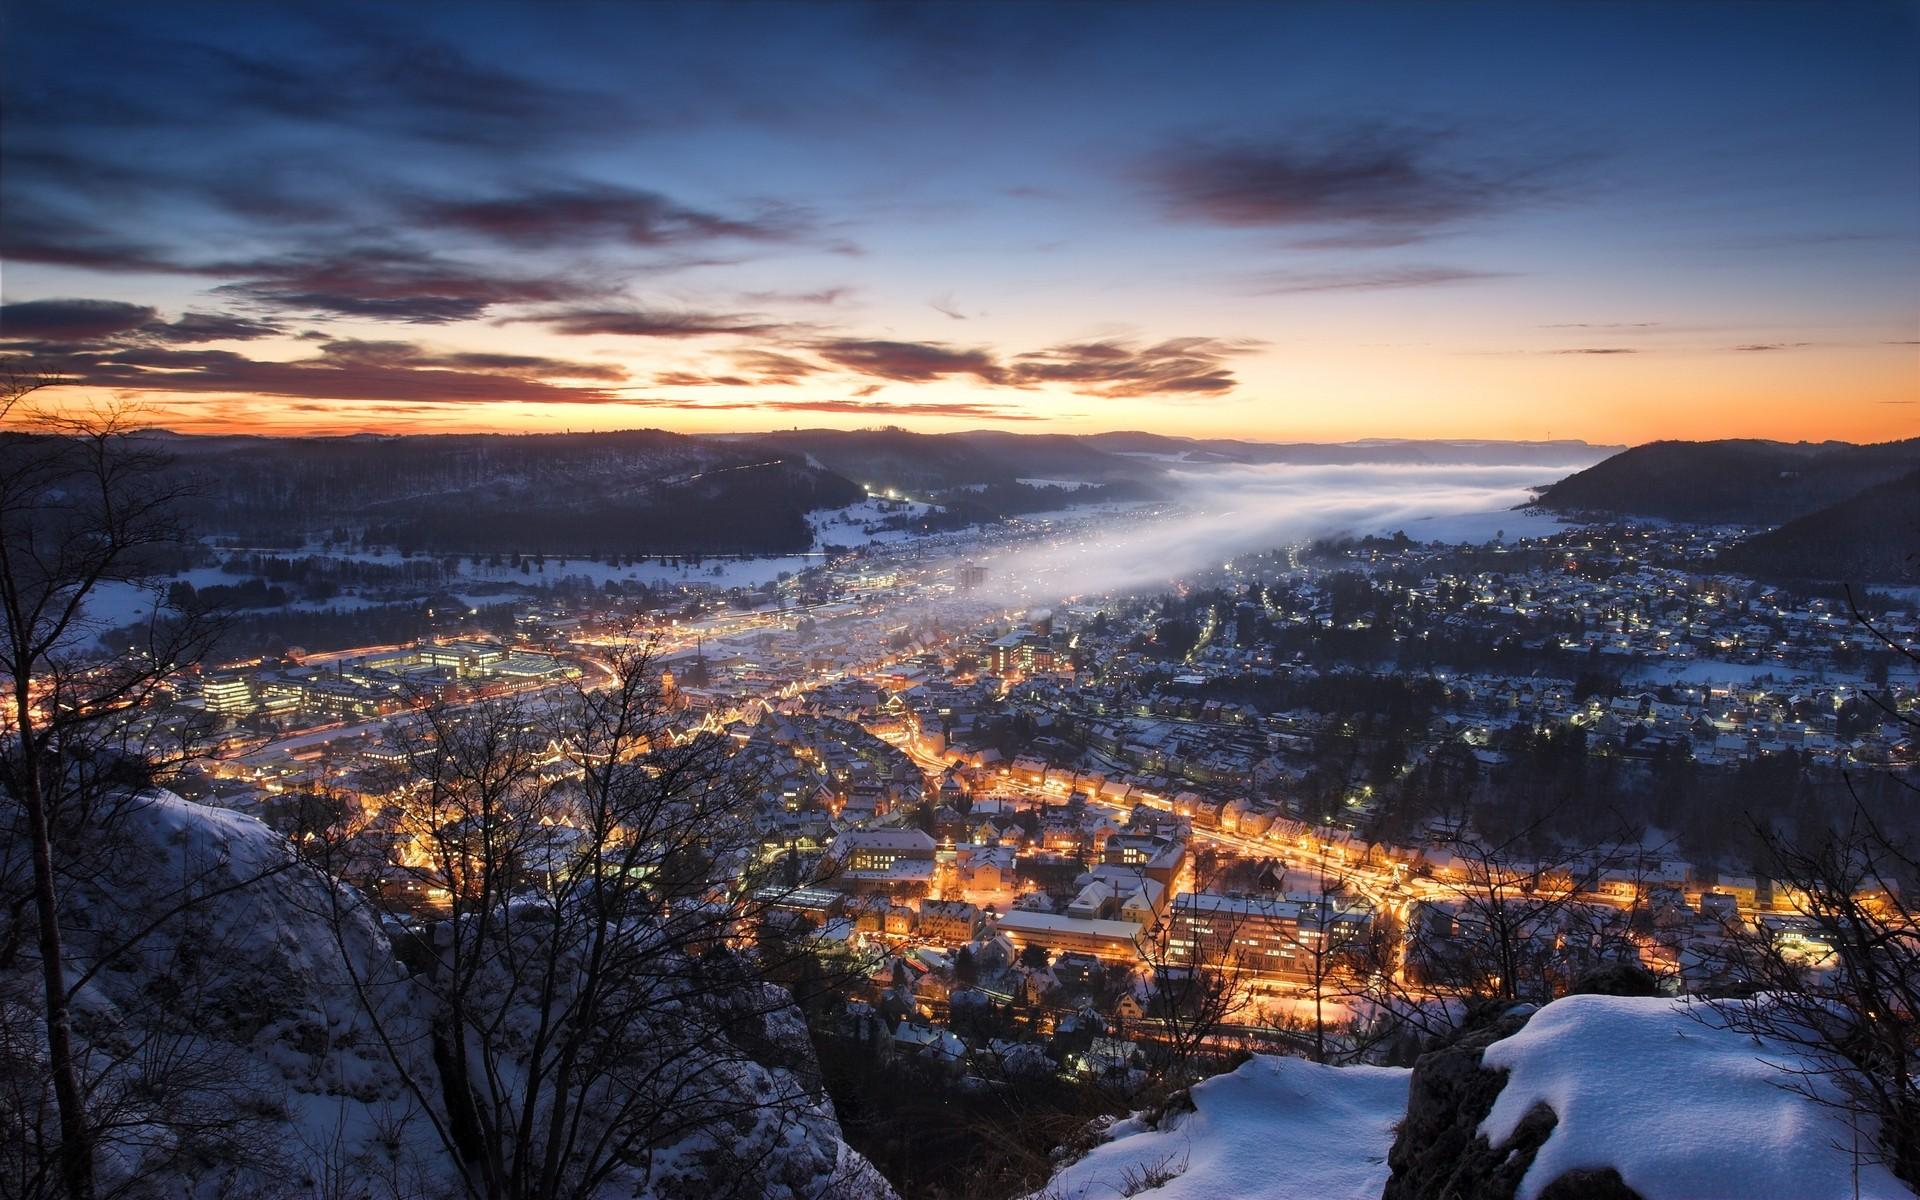 #mist, #winter, #cityscape, #clouds, #landscape, #Europe, #sunset, #Germany, #hills, #nature, #snow, #lights, #city wallpaper HD Wallpaper